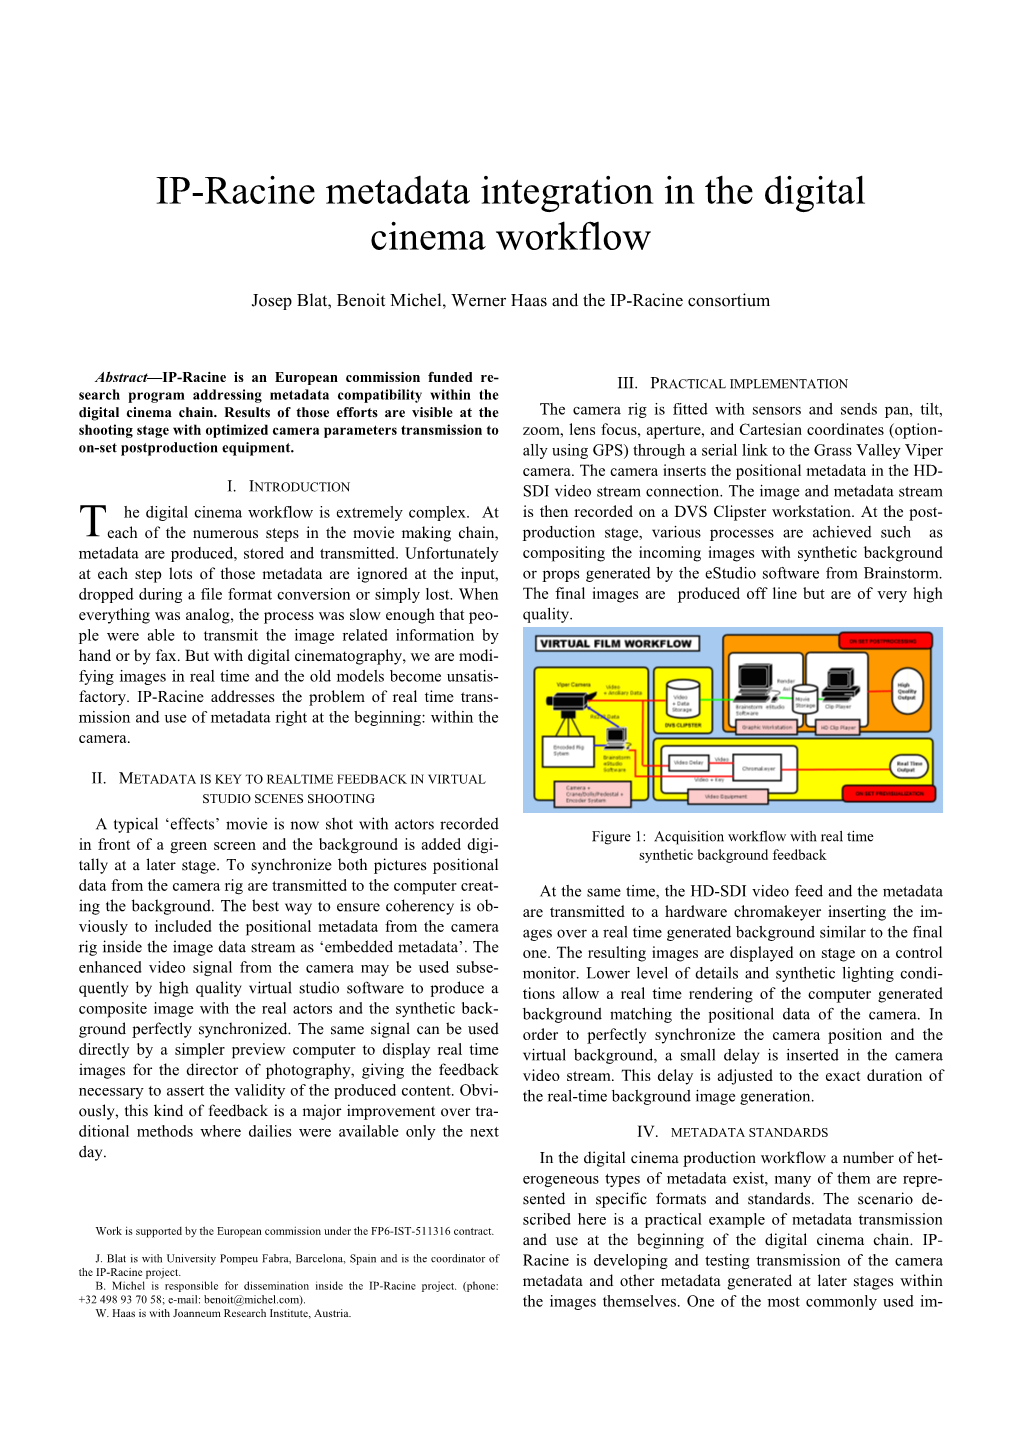 IP-Racine Metadata Integration in the Digital Cinema Workflow